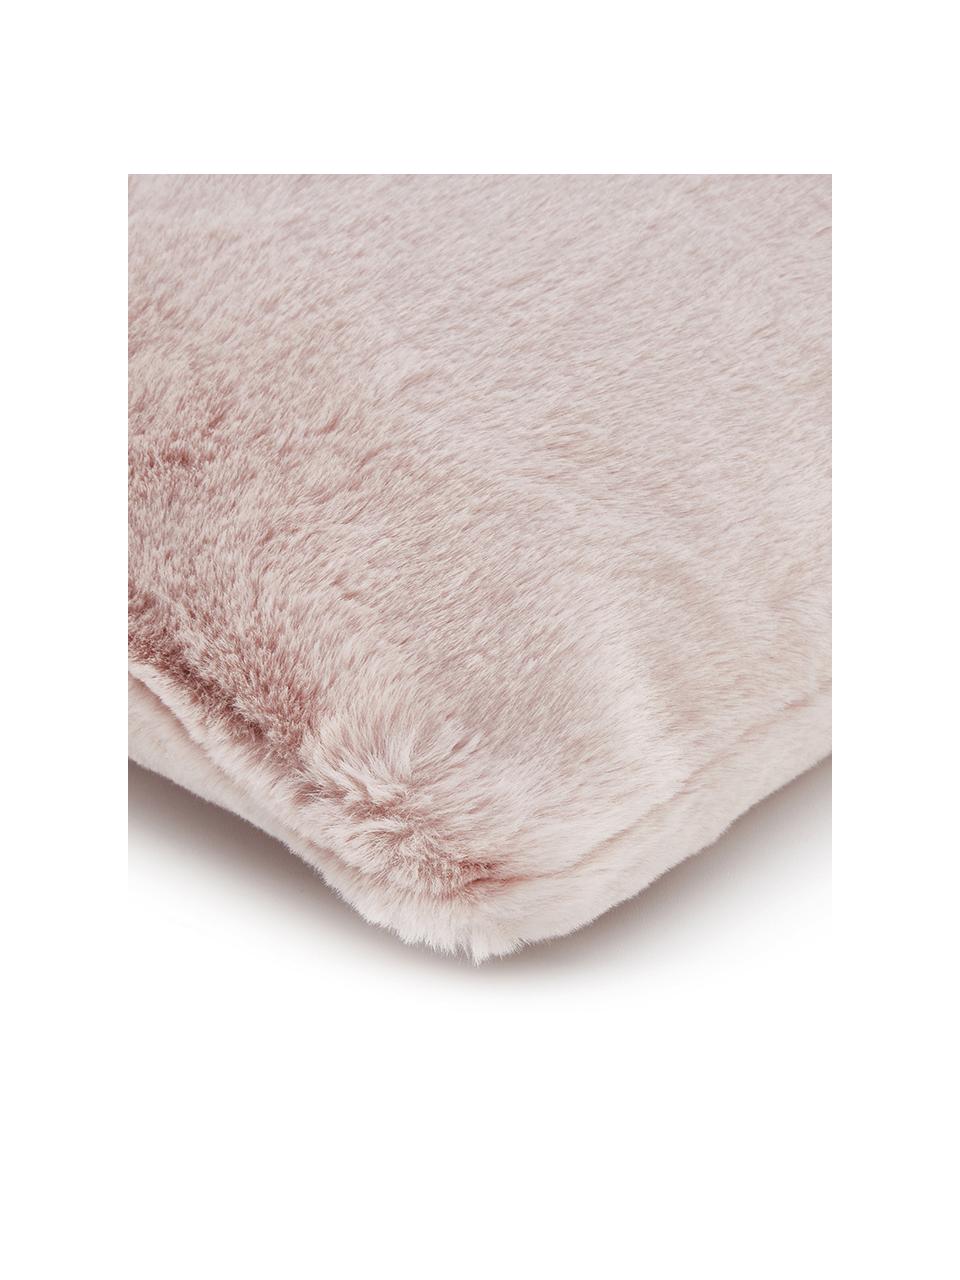 Flauschige Kunstfell-Kissenhülle Mette in Rosa, glatt, Vorderseite: 100% Polyester, Rückseite: 100% Polyester, Rosa, 30 x 50 cm